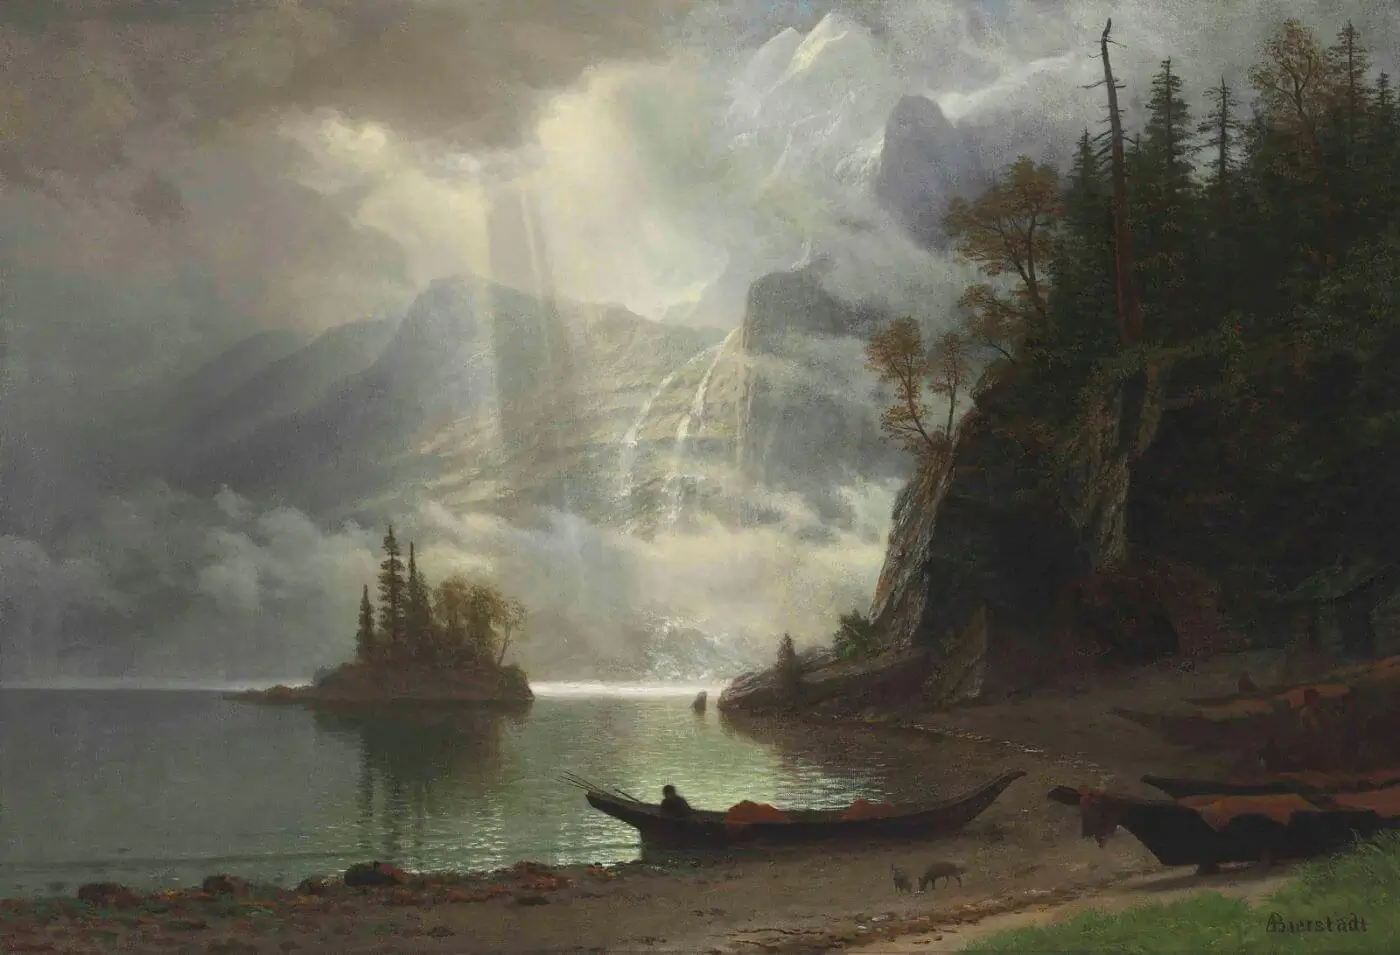 Island In The Lake Albert Bierstadt's Landscape Painting